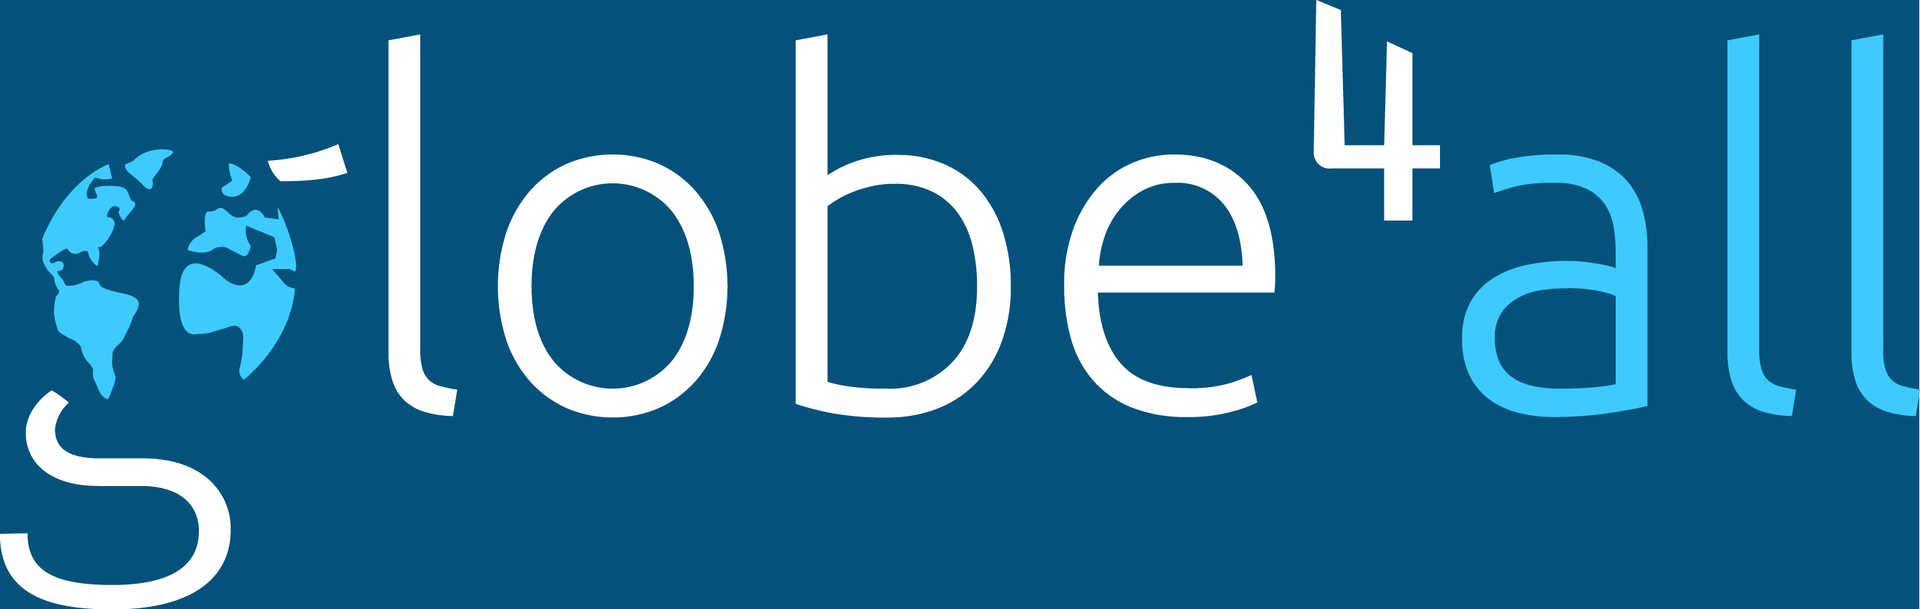 Globe4All logo